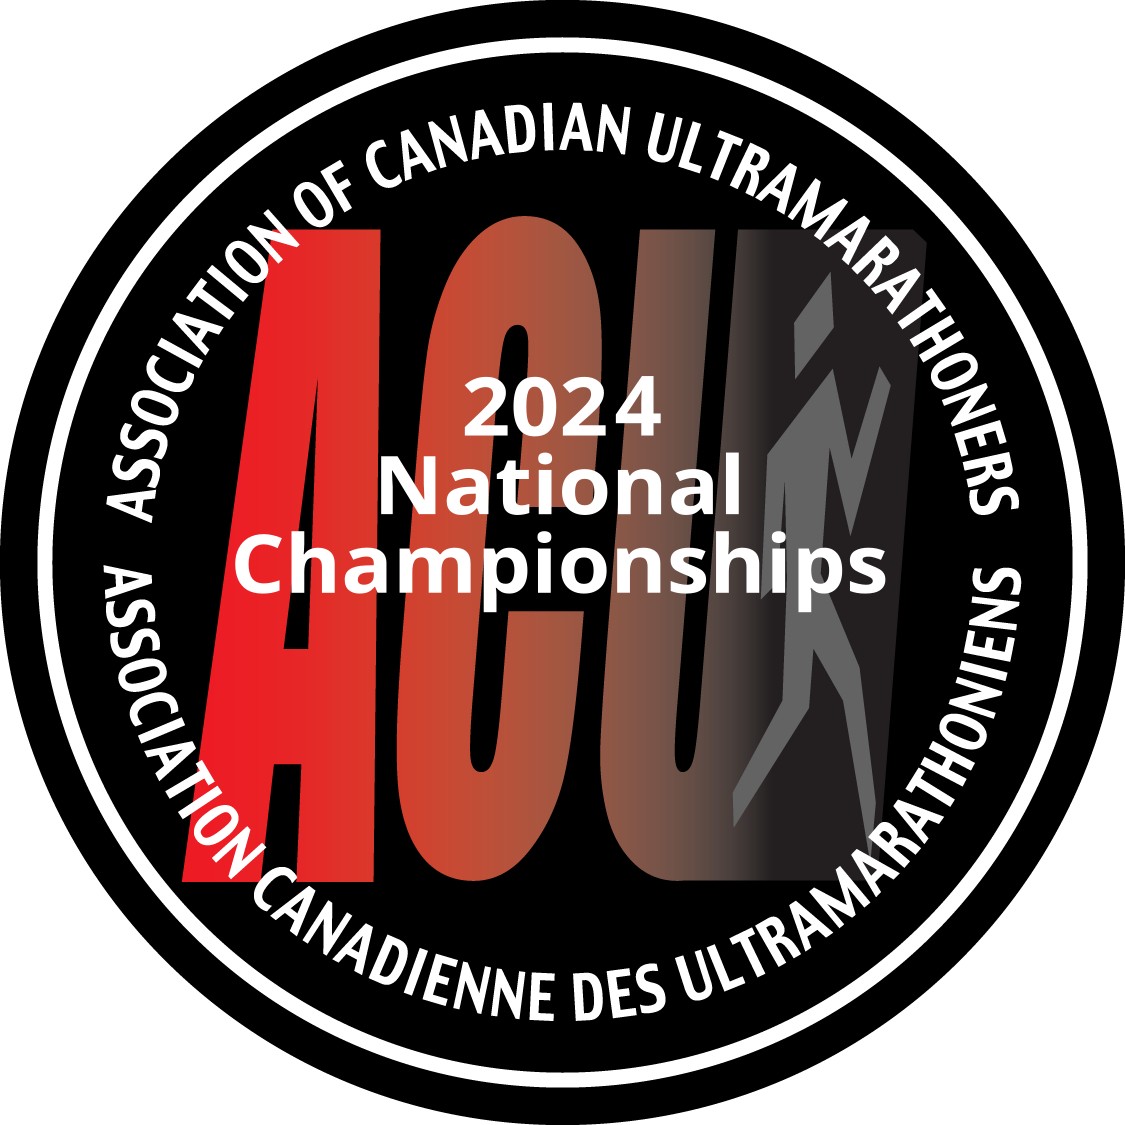 ACU 2024 NC logo badge high res vector based